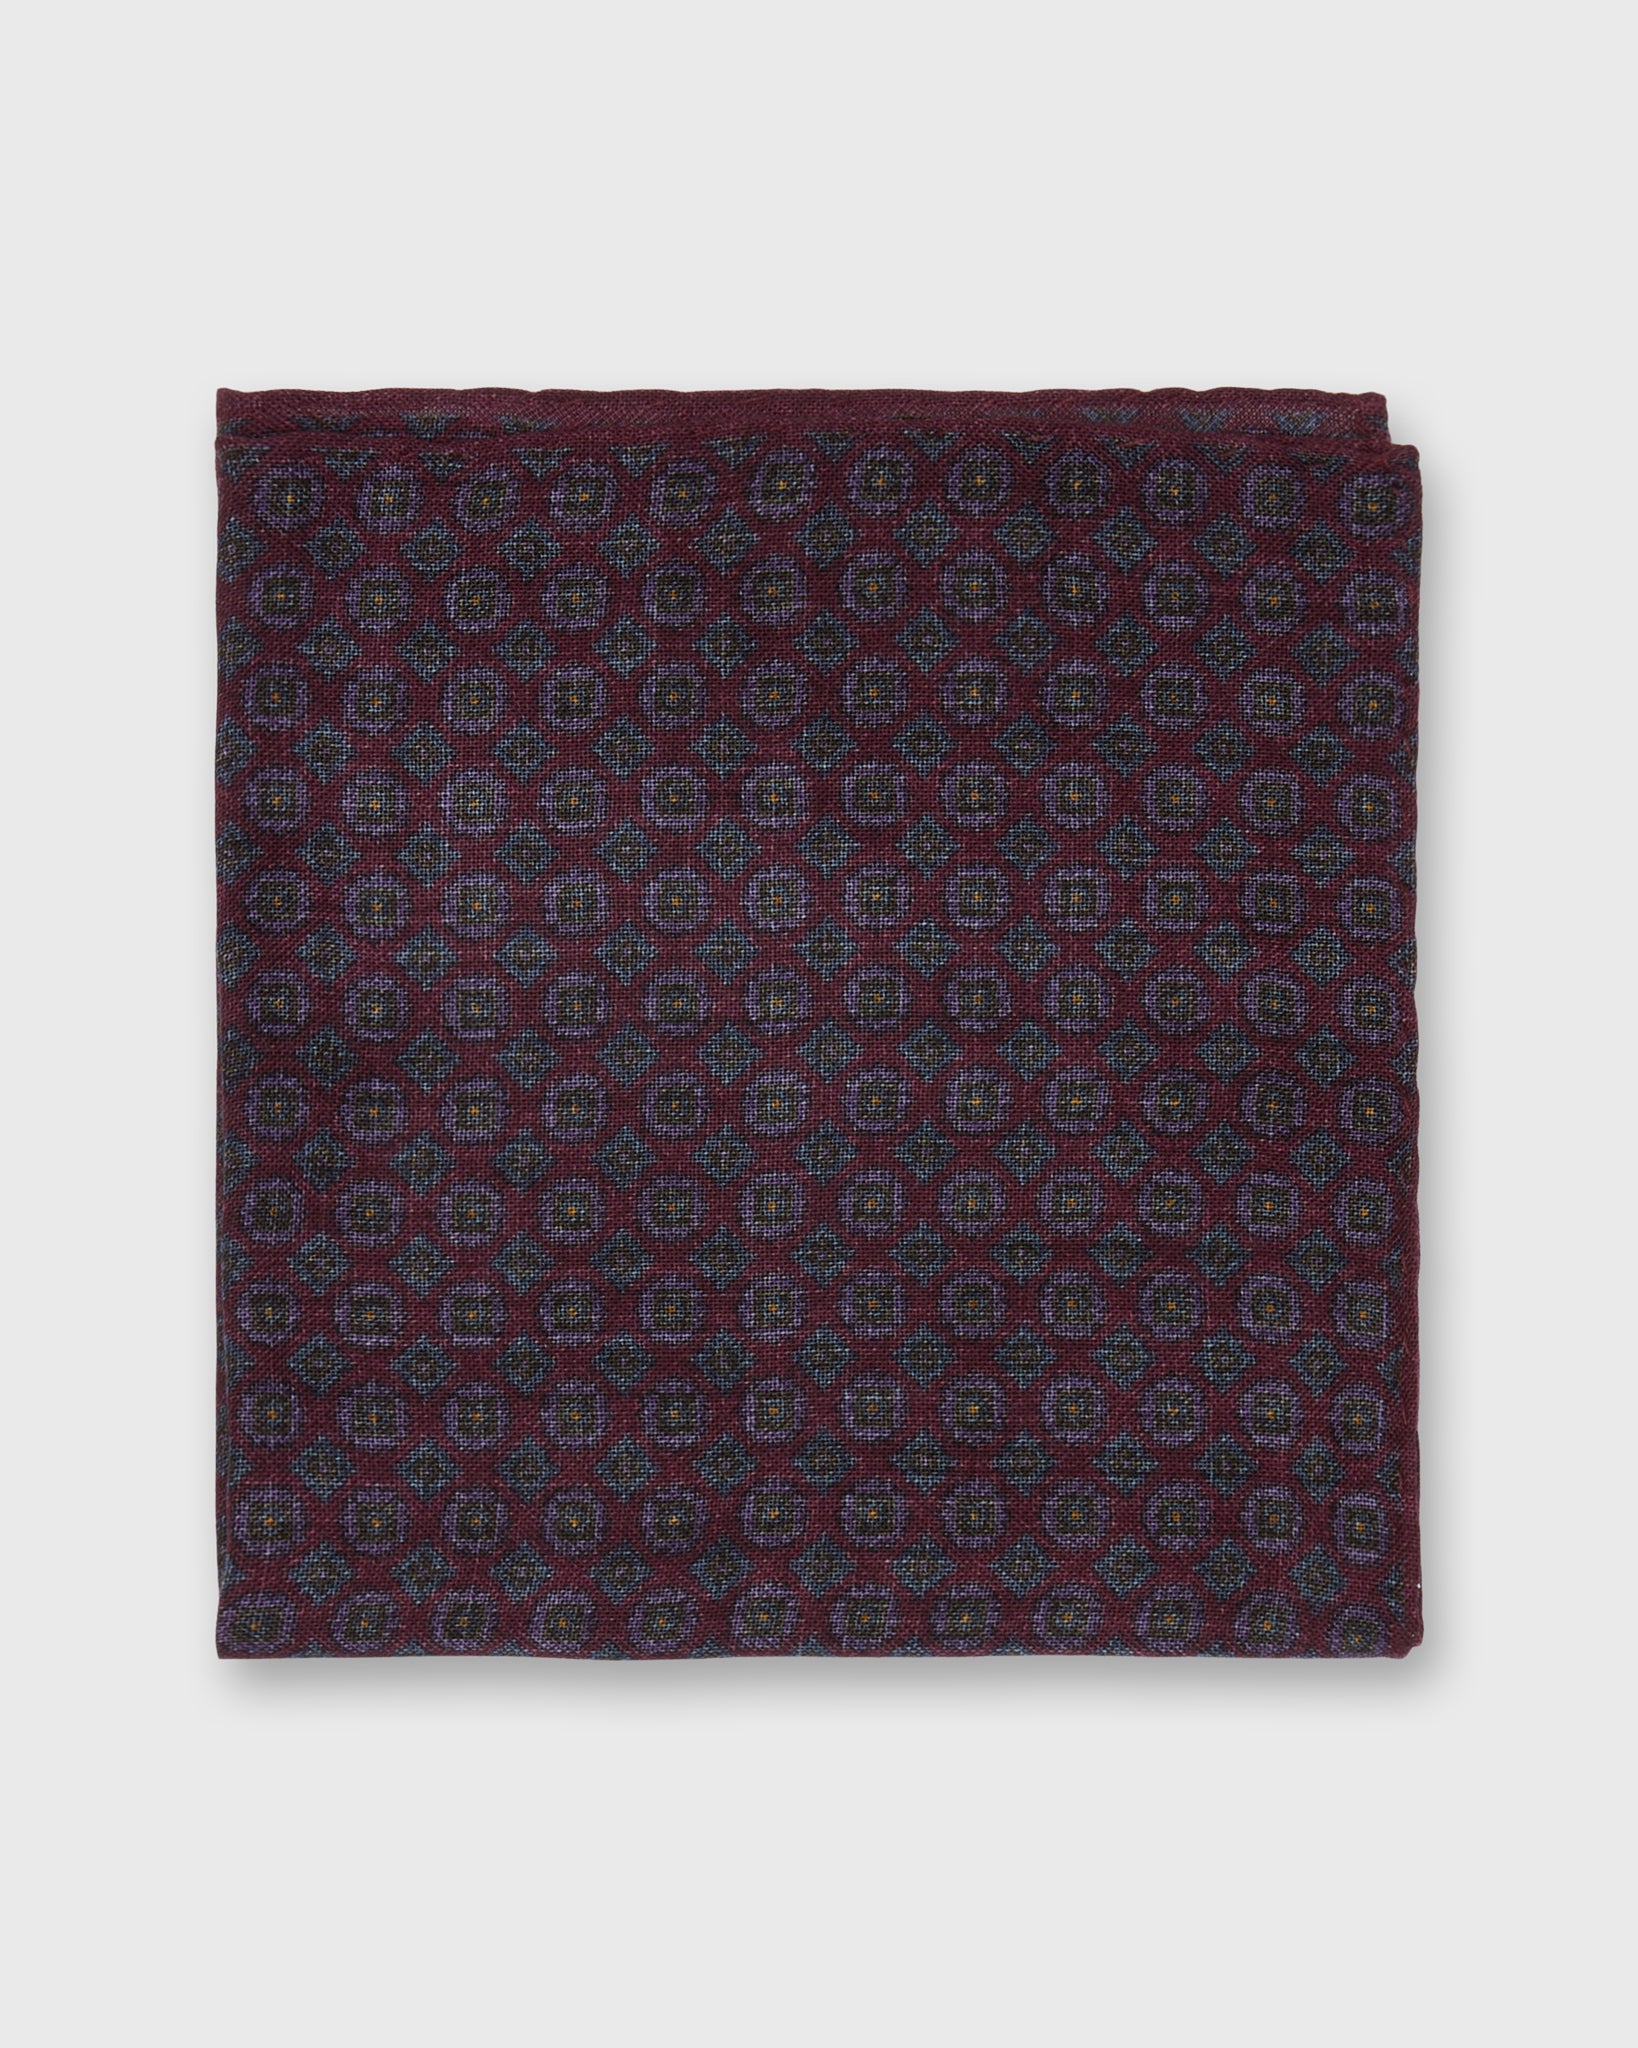 Wool/Silk Pocket Square in Berry/Navy/Purple Foulard